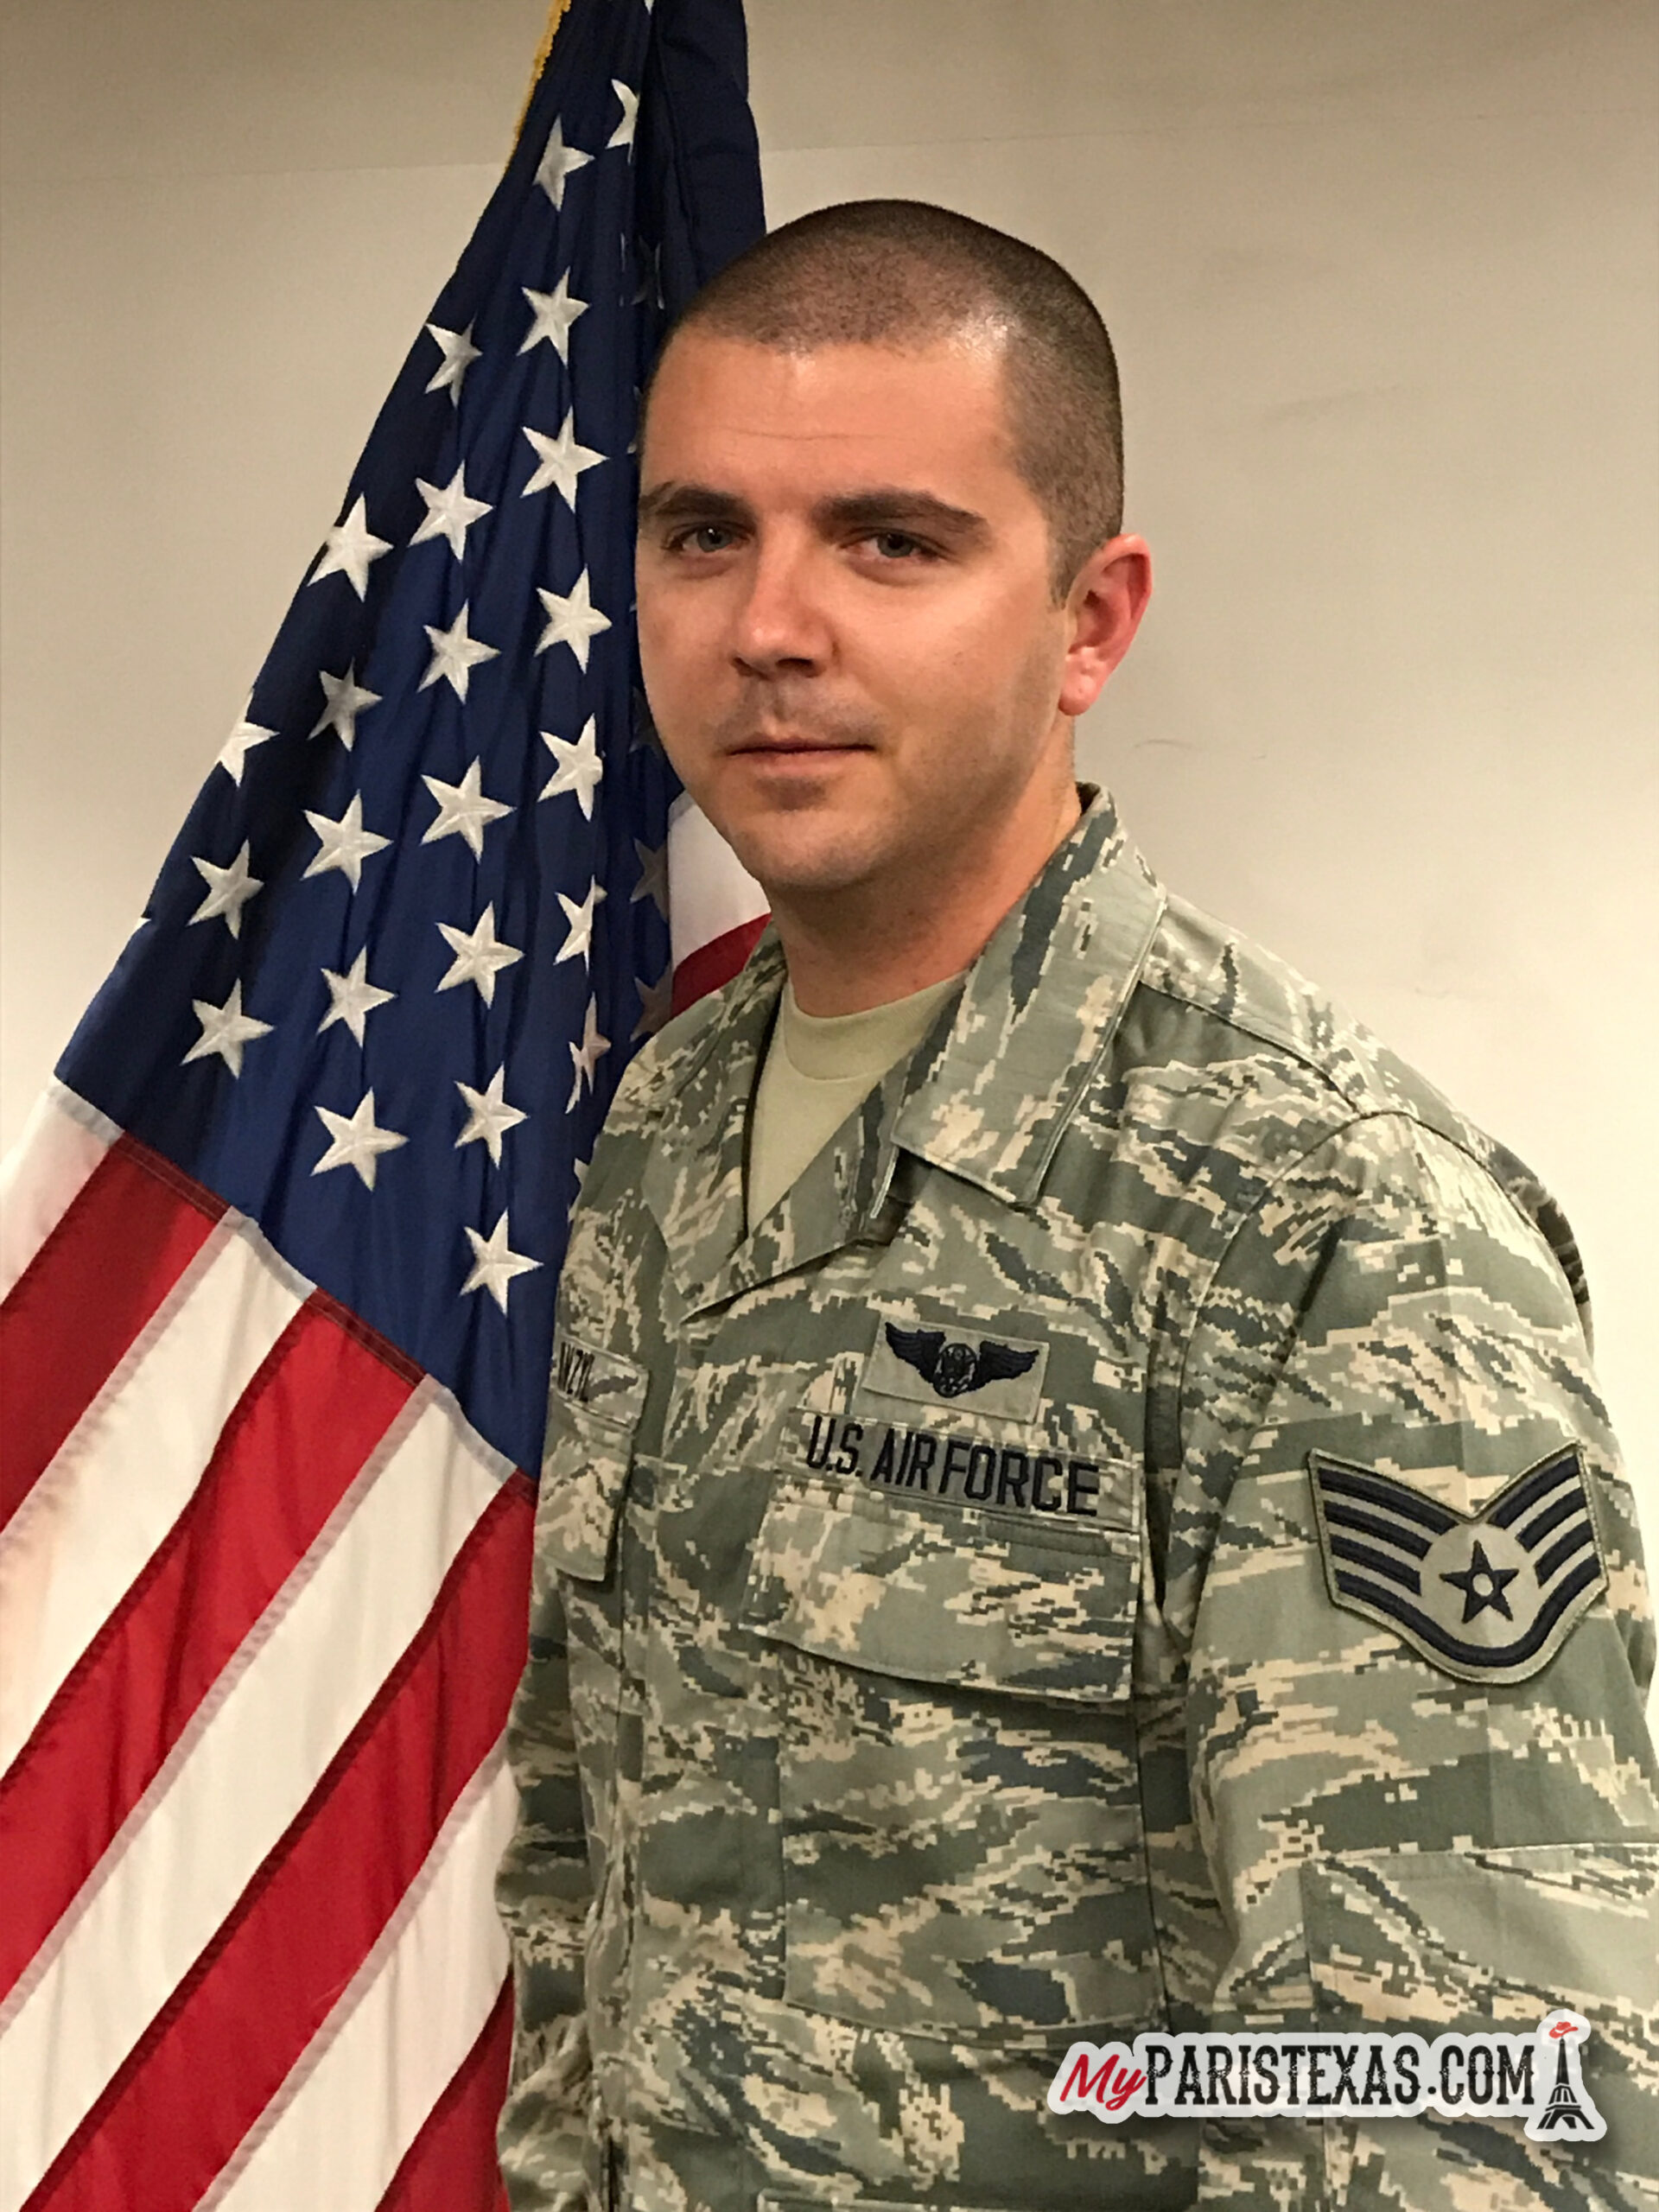 Staff Sergeant van Zyl, U.S. Air Force recruiting since January